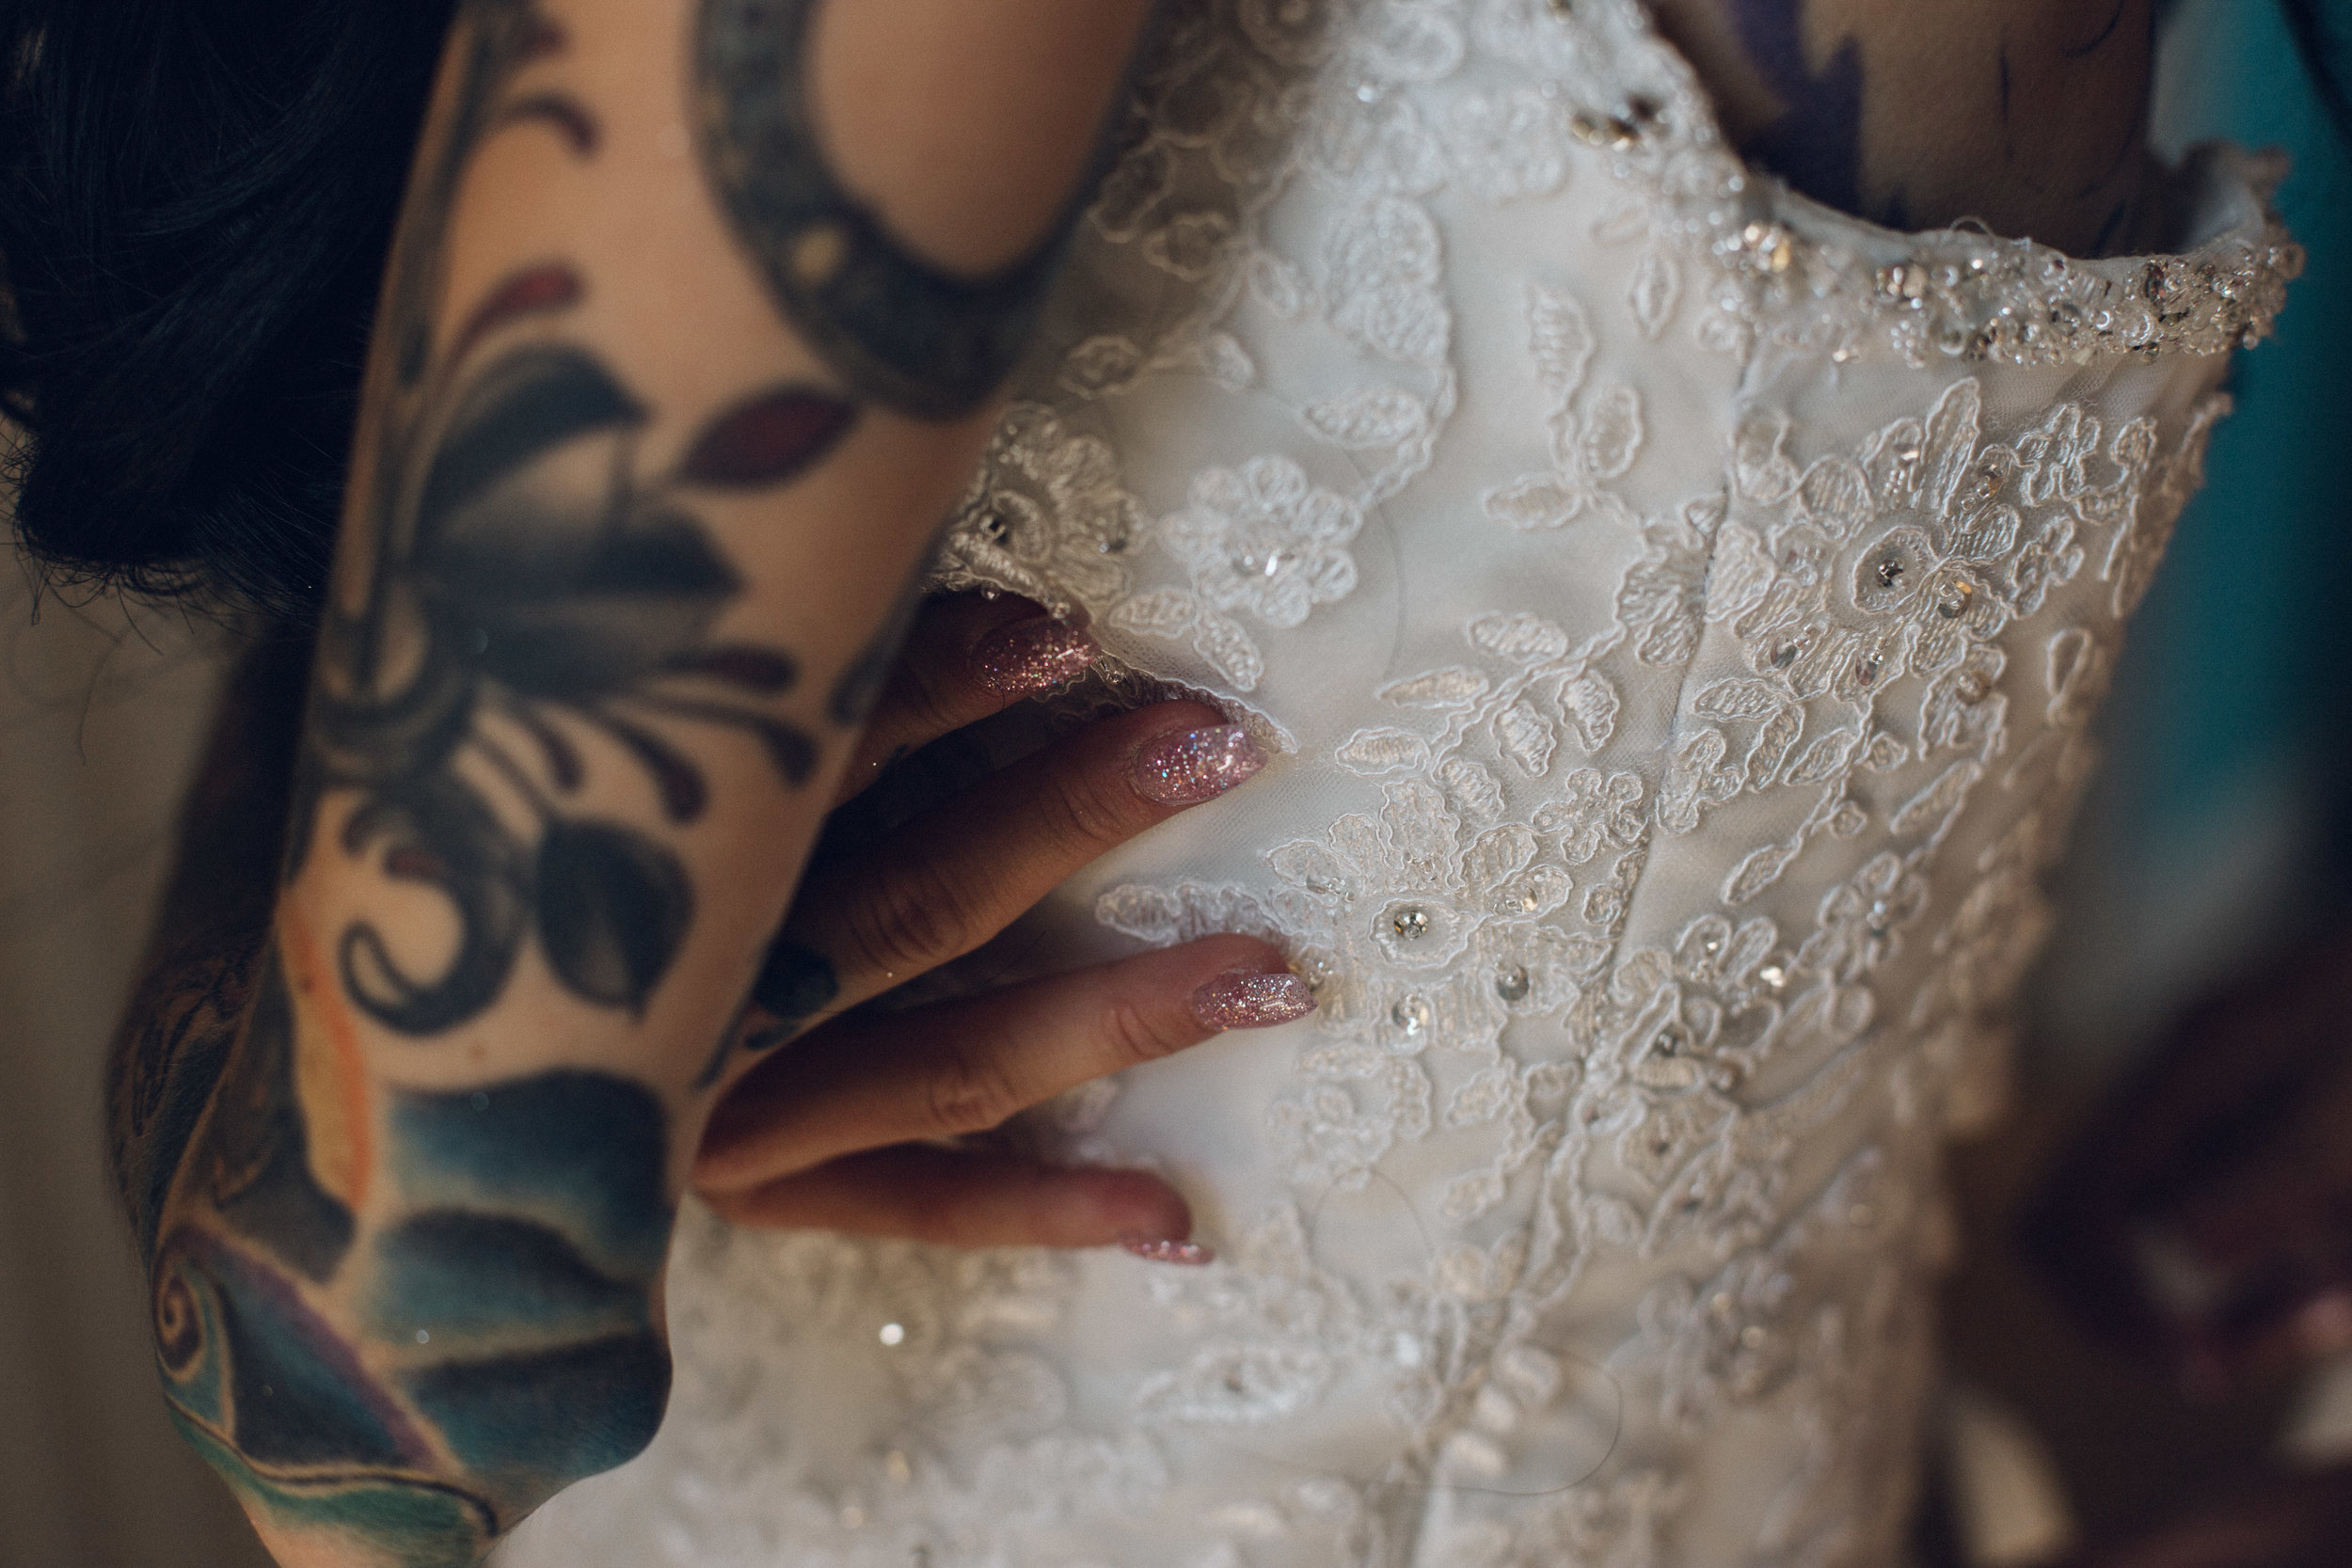 Heavily tattooed bride putting dress on 